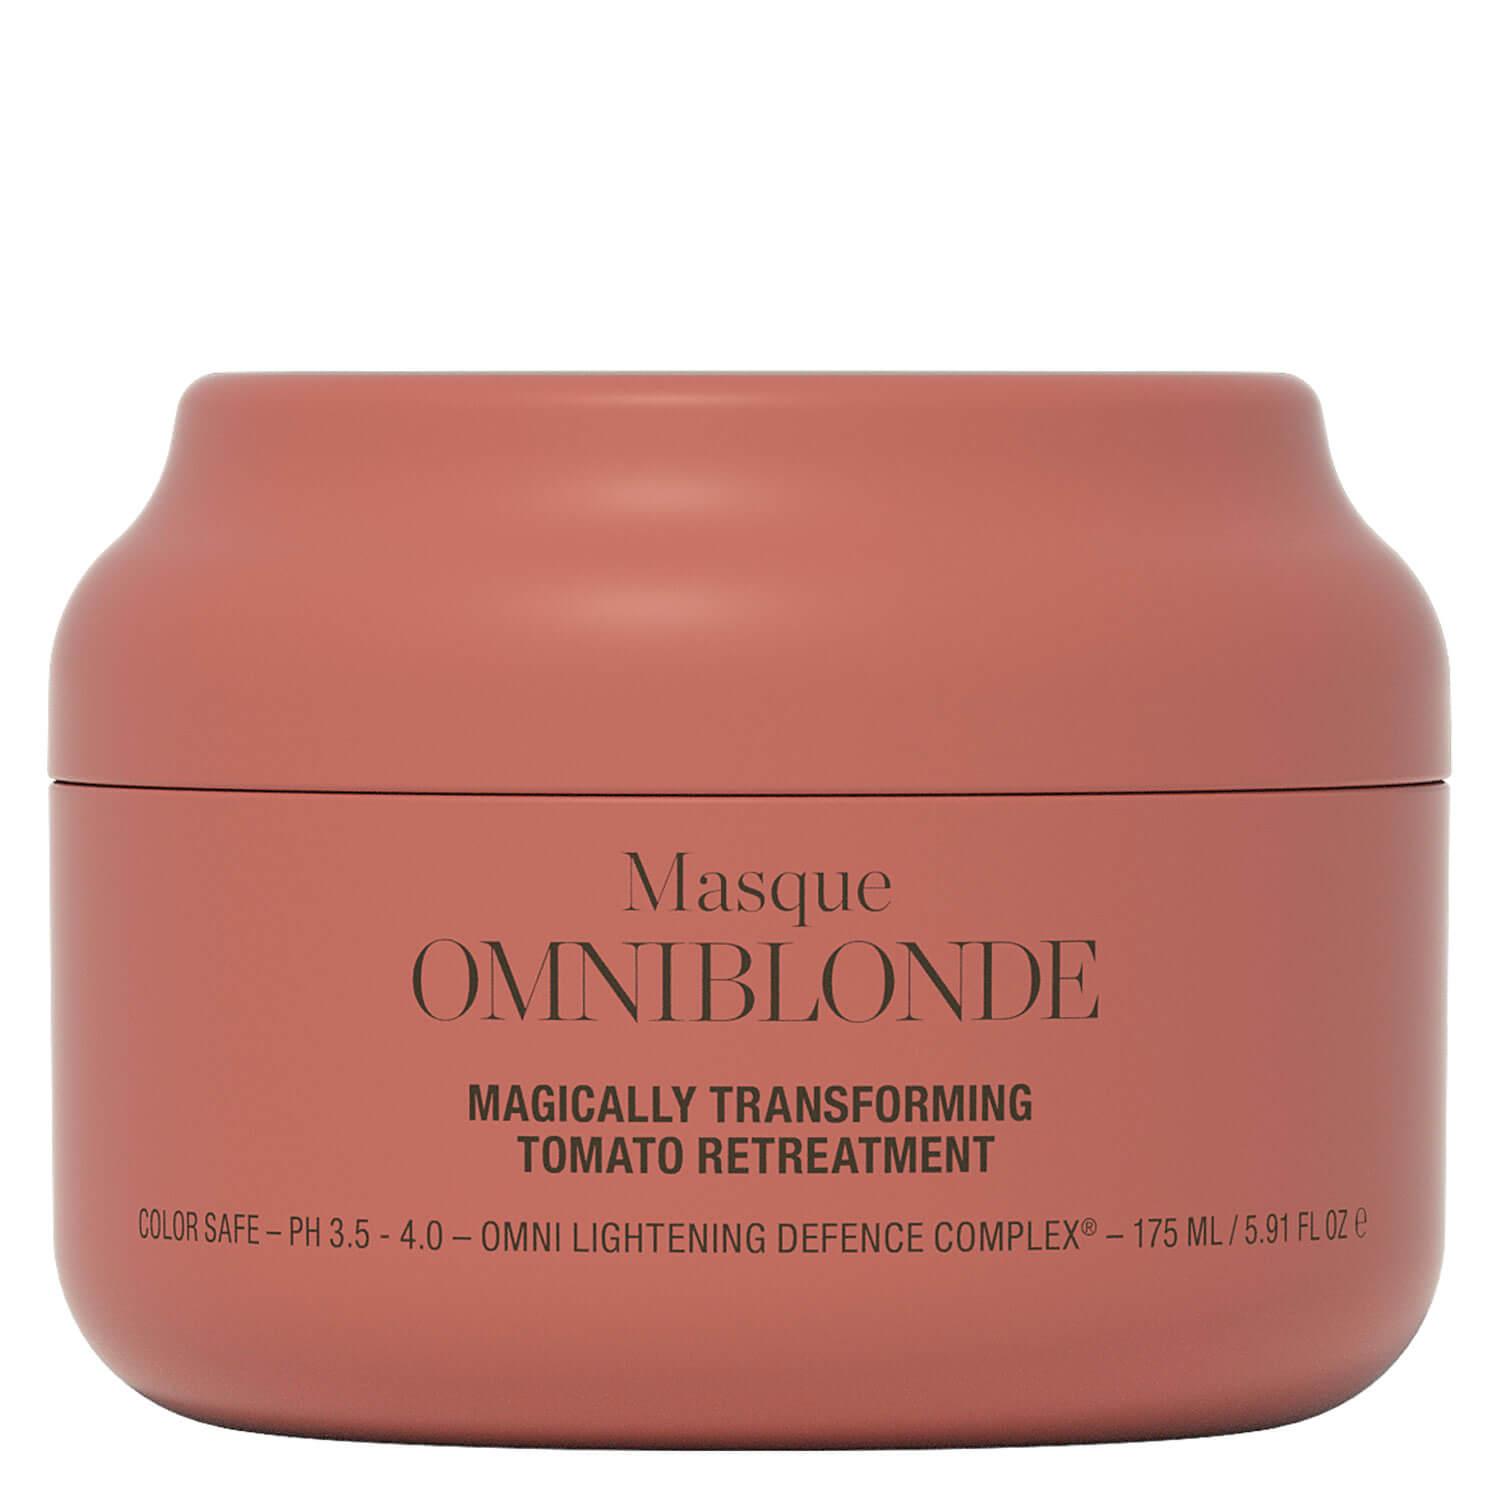 Omniblonde - Magically Transforming Tomato Retreatment